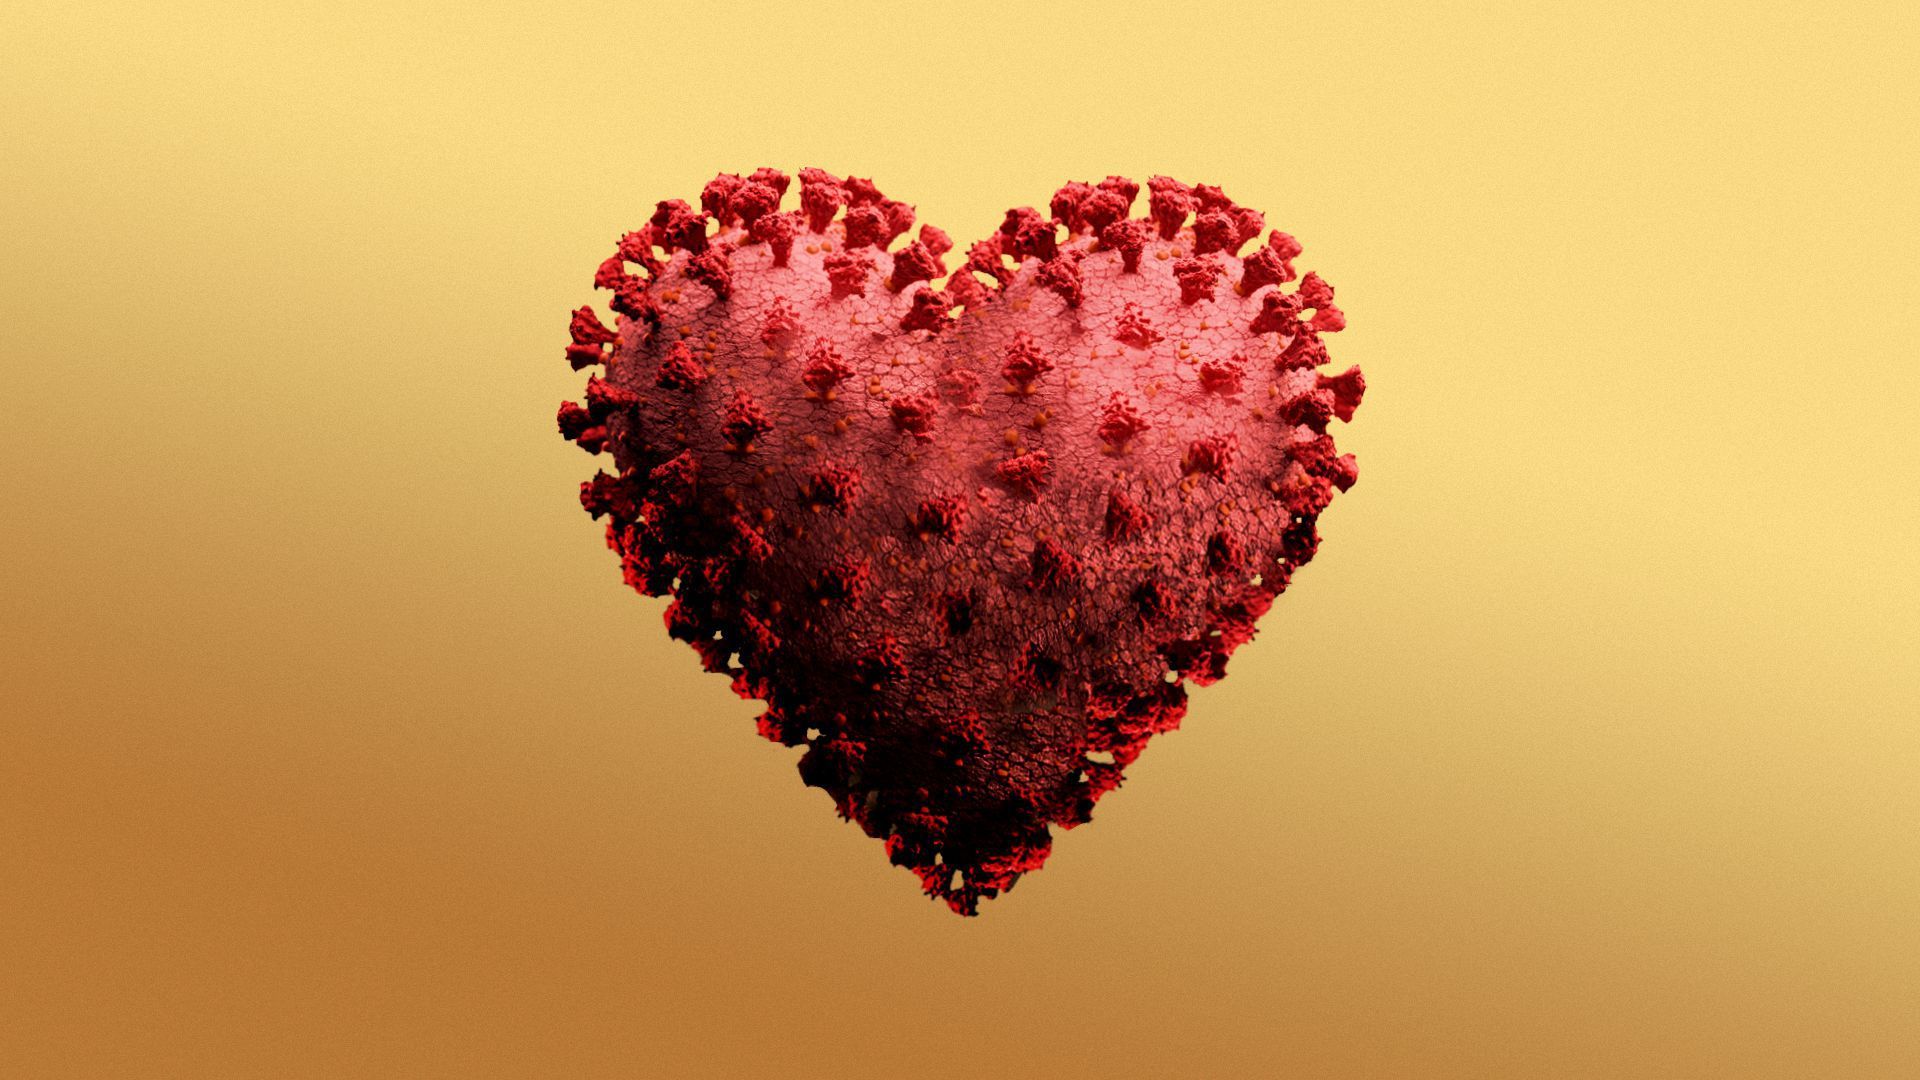 An illustration of a heart with coronaviruses on it.